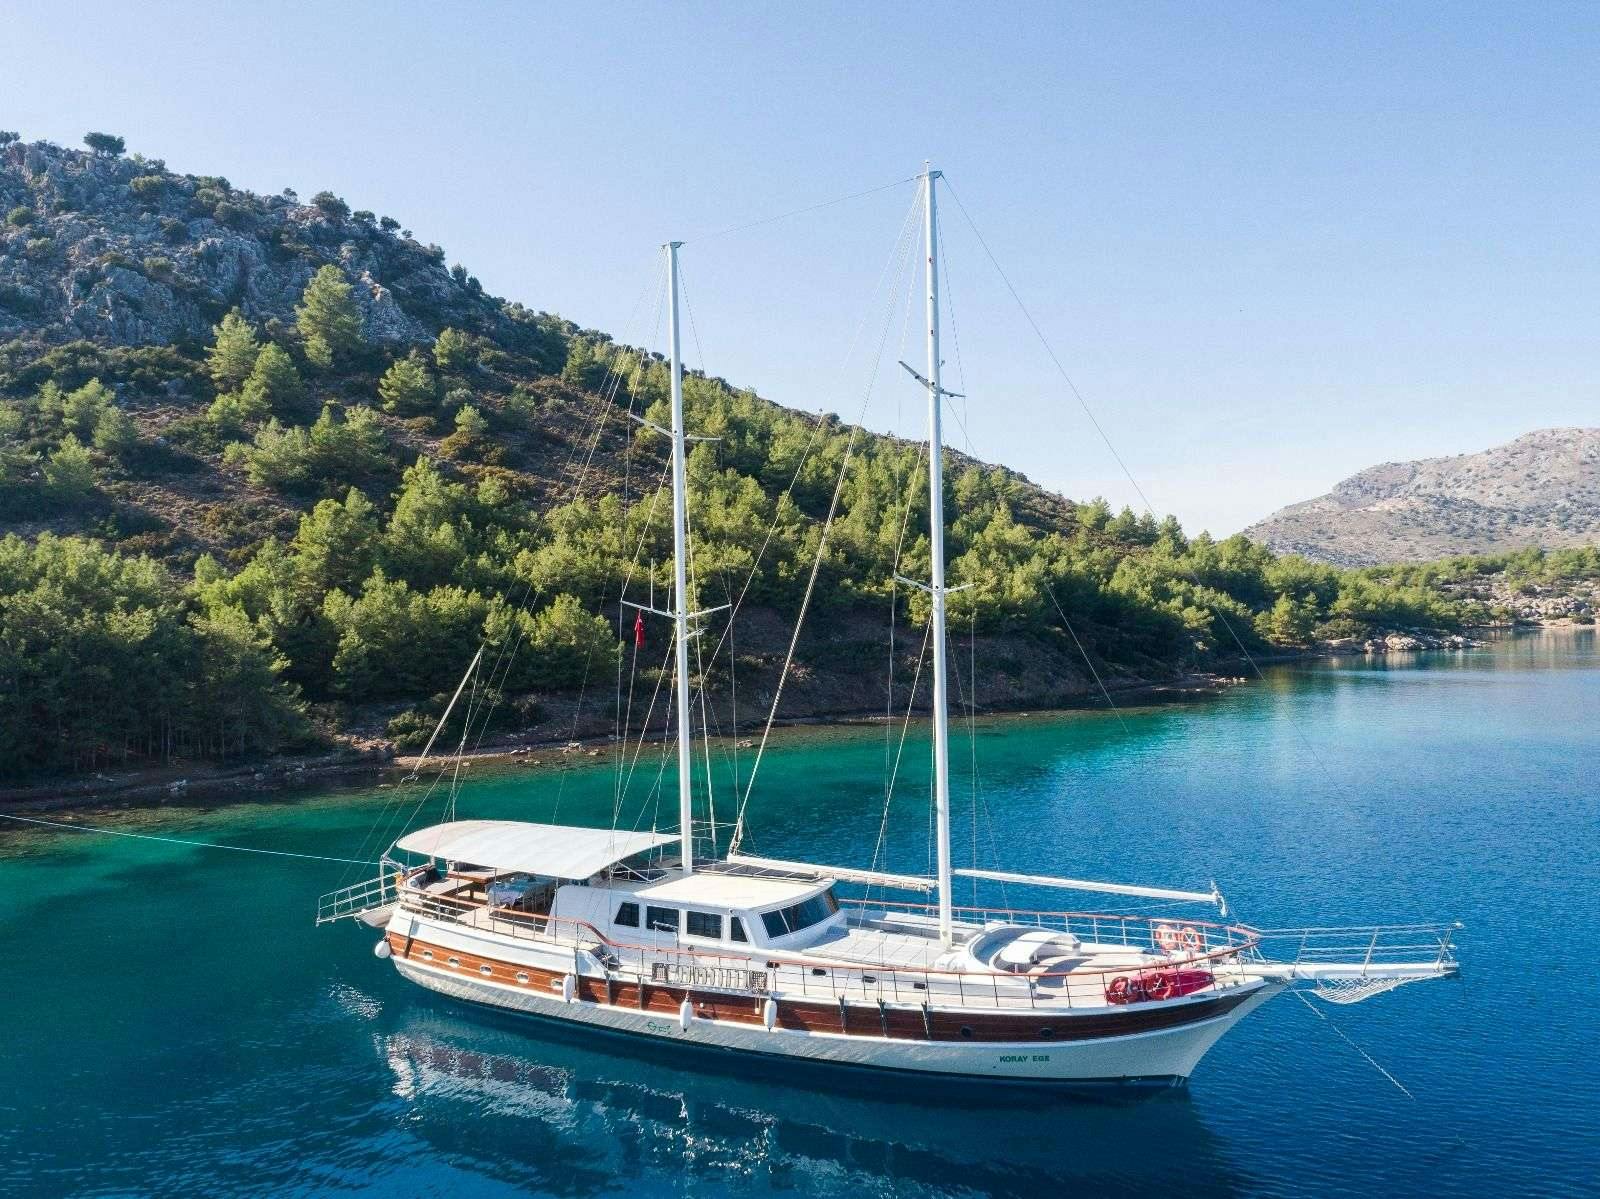 koray ege - Yacht Charter Porto Cheli & Boat hire in Greece & Turkey 1